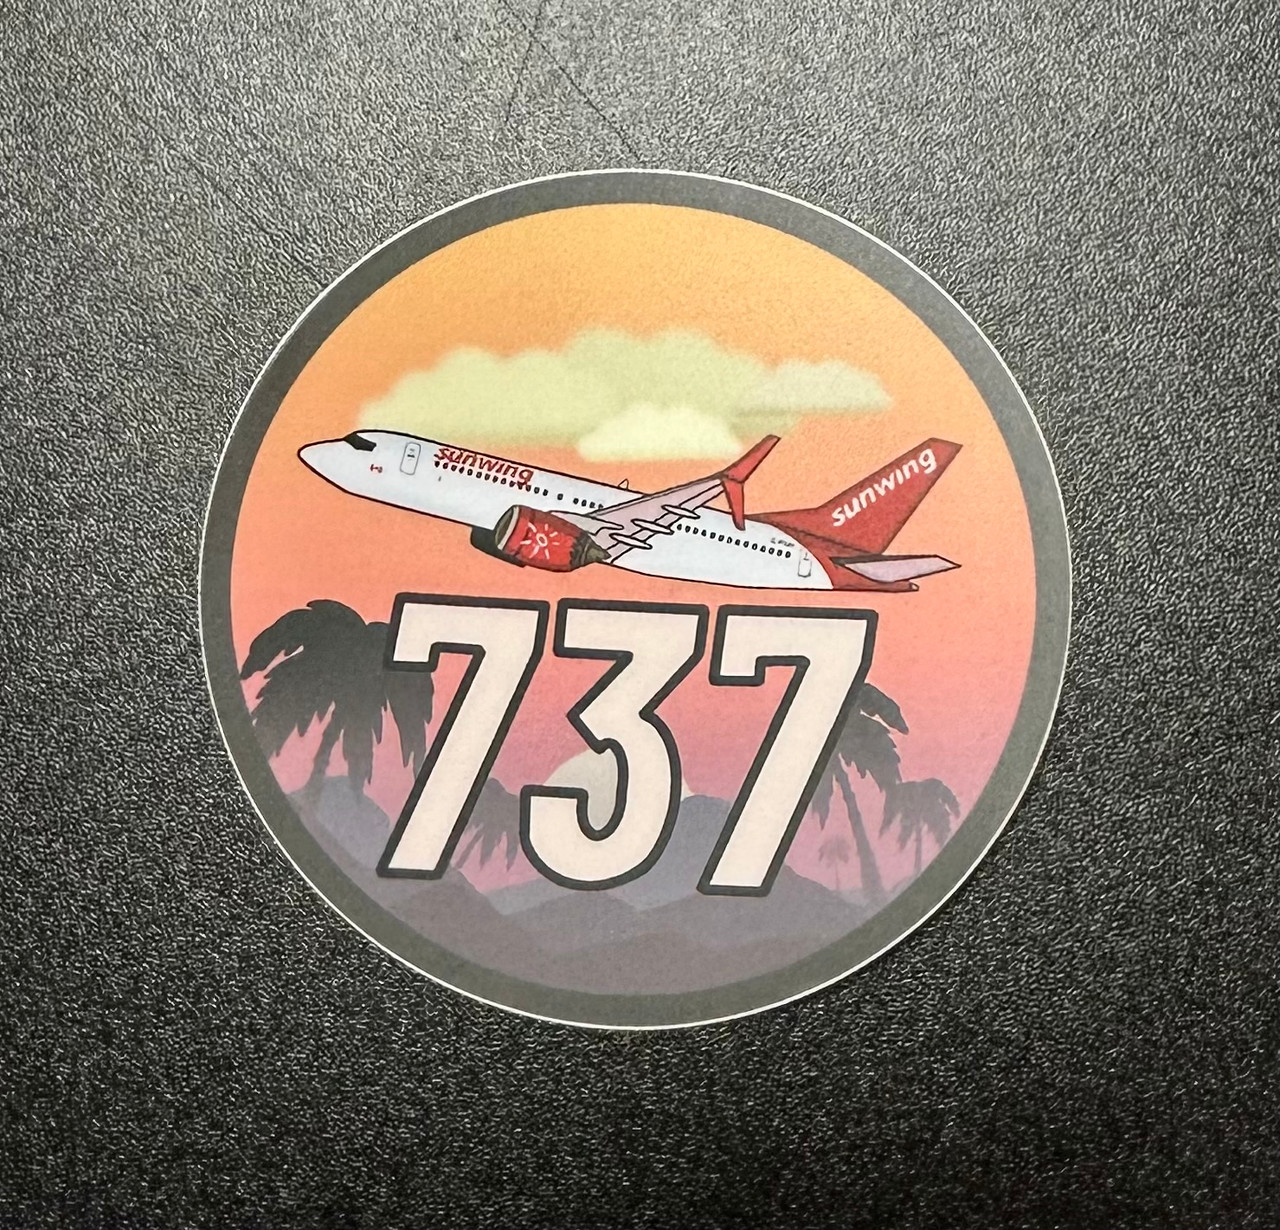 Sunwing 737 Premium Sticker